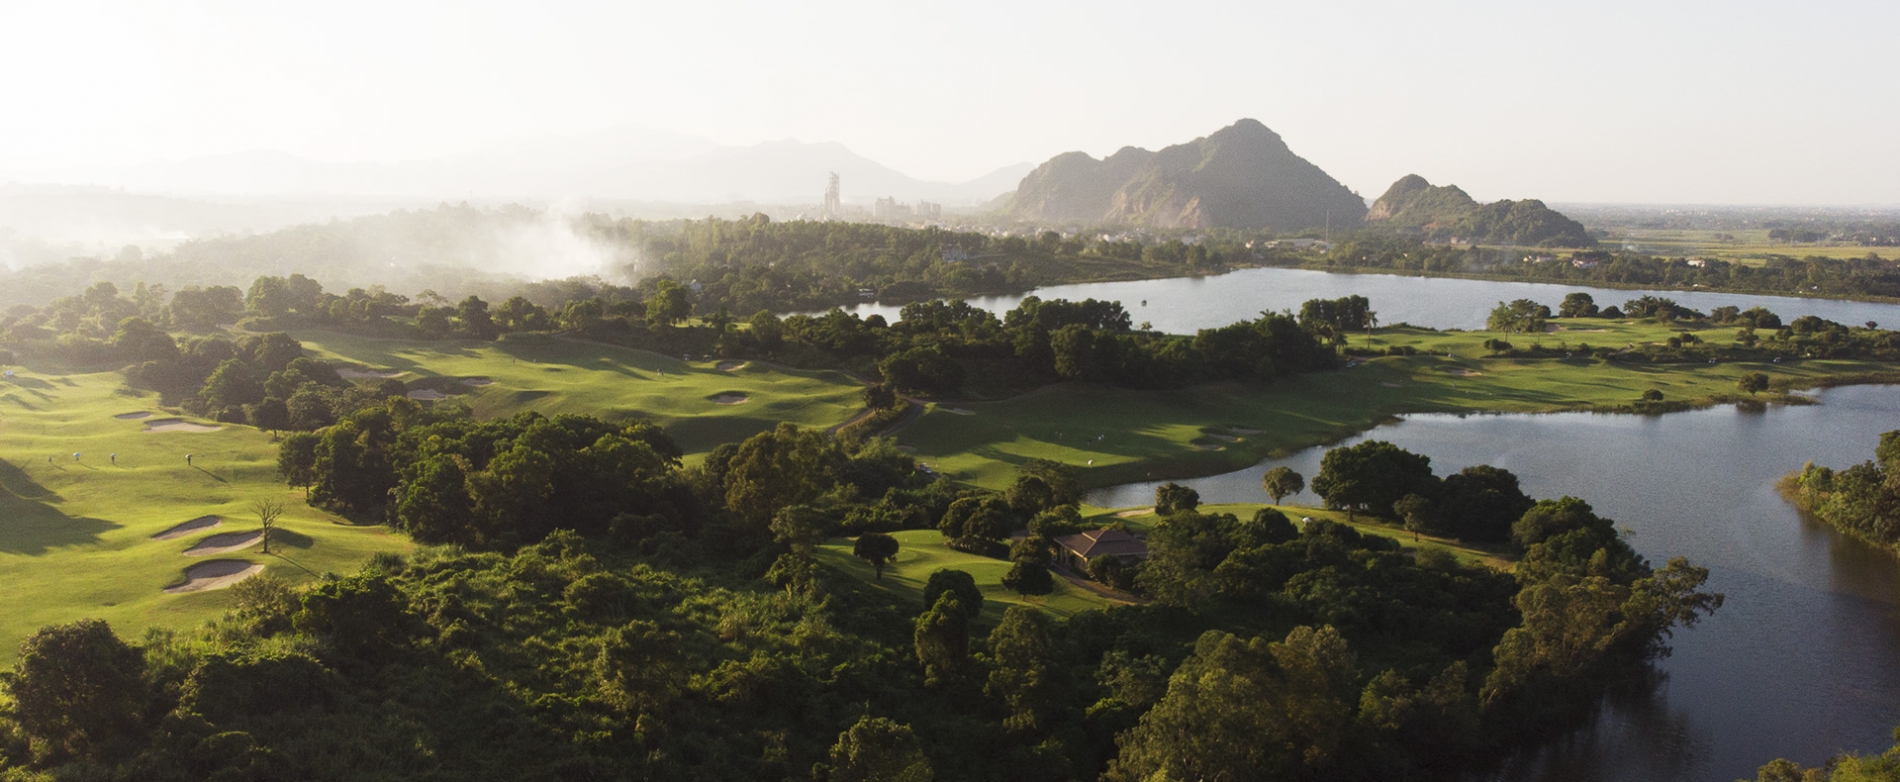 San-golf-sky-lake-resort-%26-golf-club-lien-tiep-duoc-lua-chon-la-diem-den-cho-giai-golf-lon-1